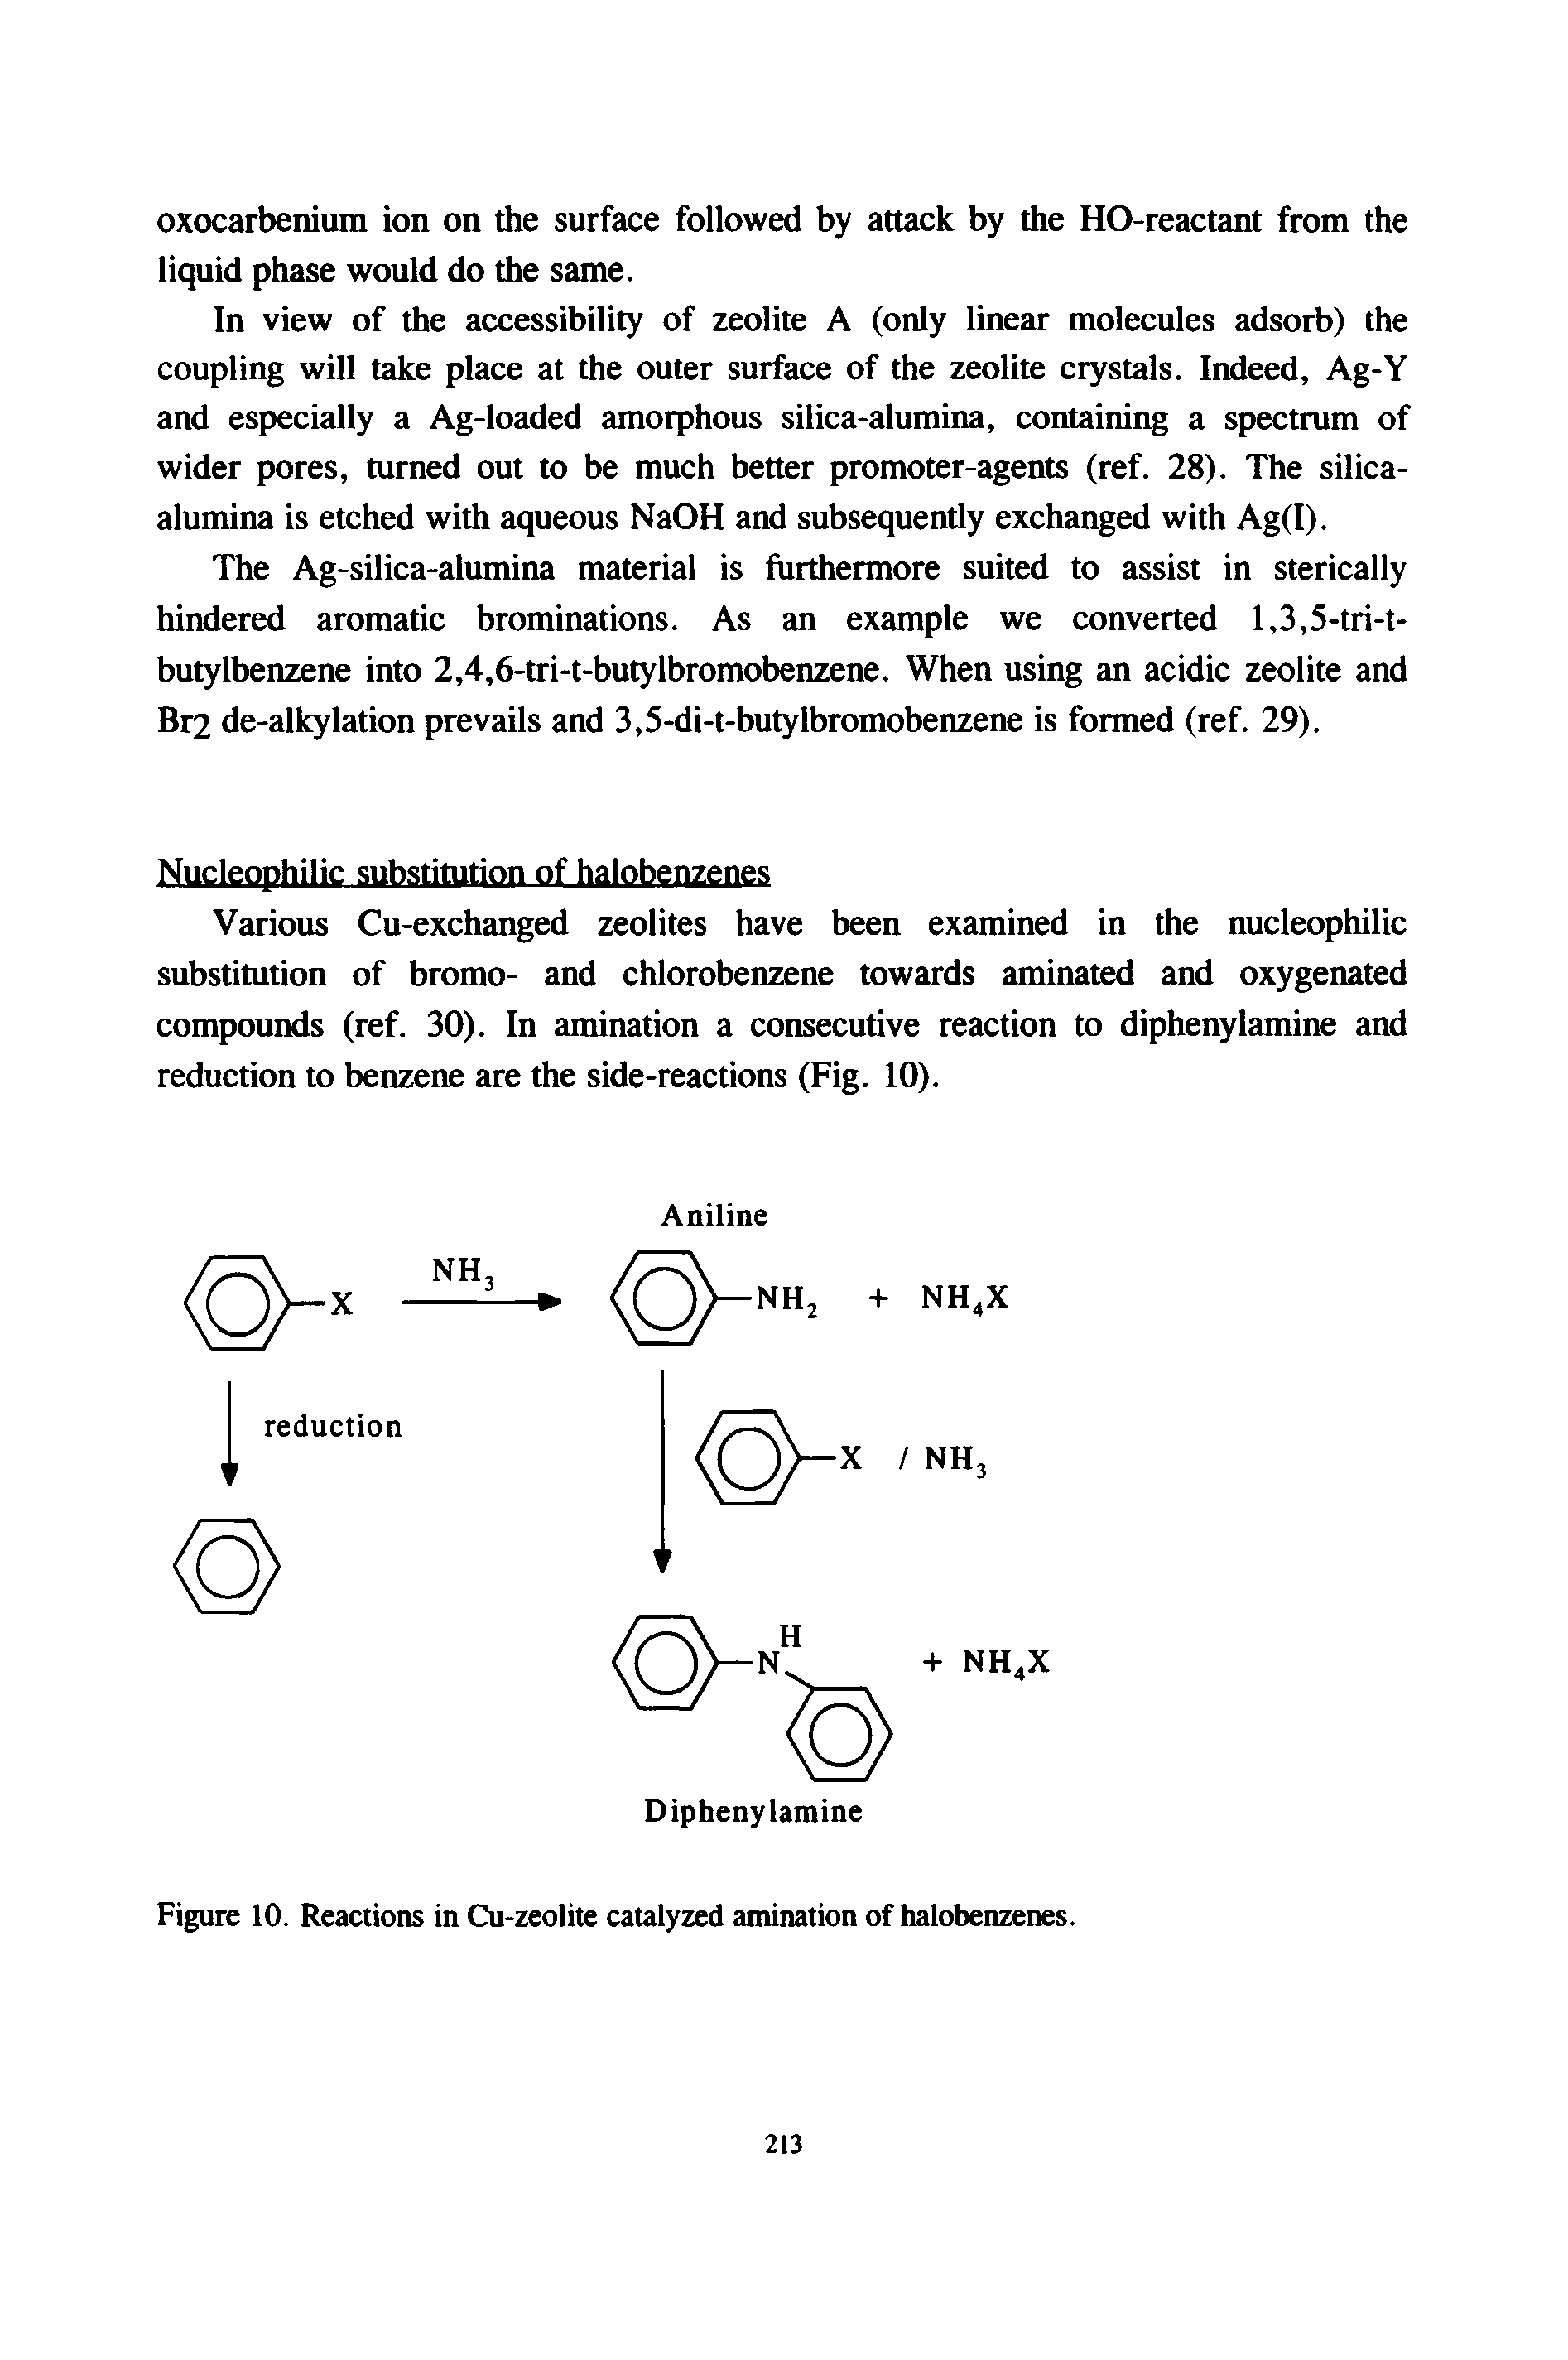 Figure 10. Reactions in Cu-zeolite catalyzed amination of halobenzenes.